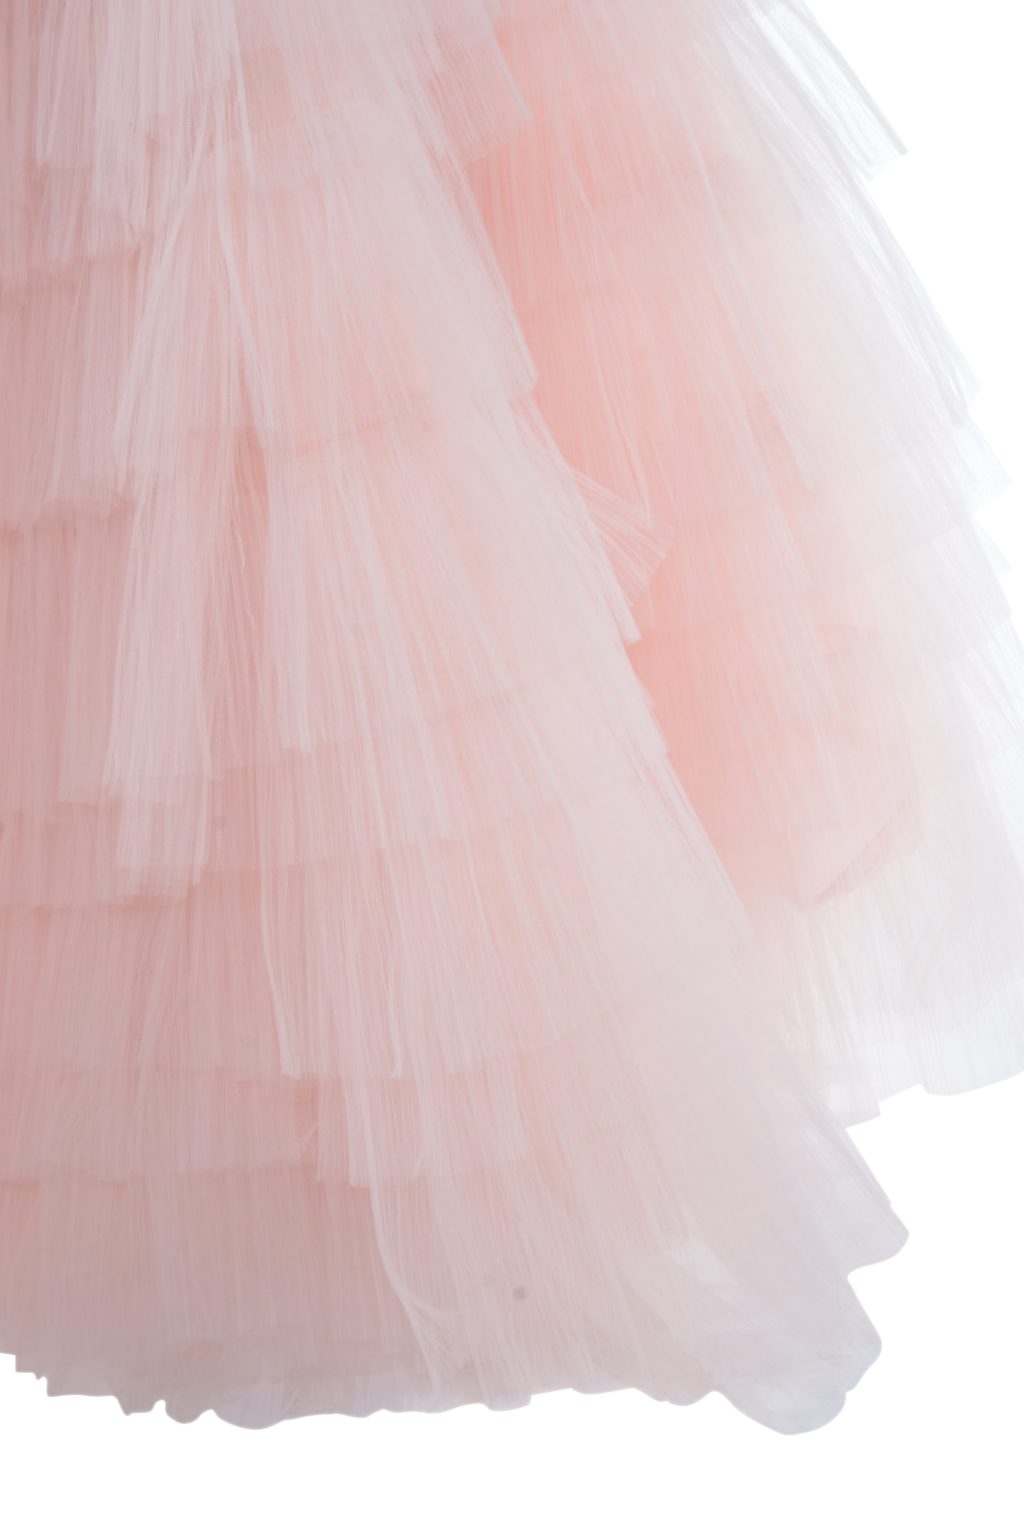 Carolina Herrera Pink Tule Dress - Janet Mandell